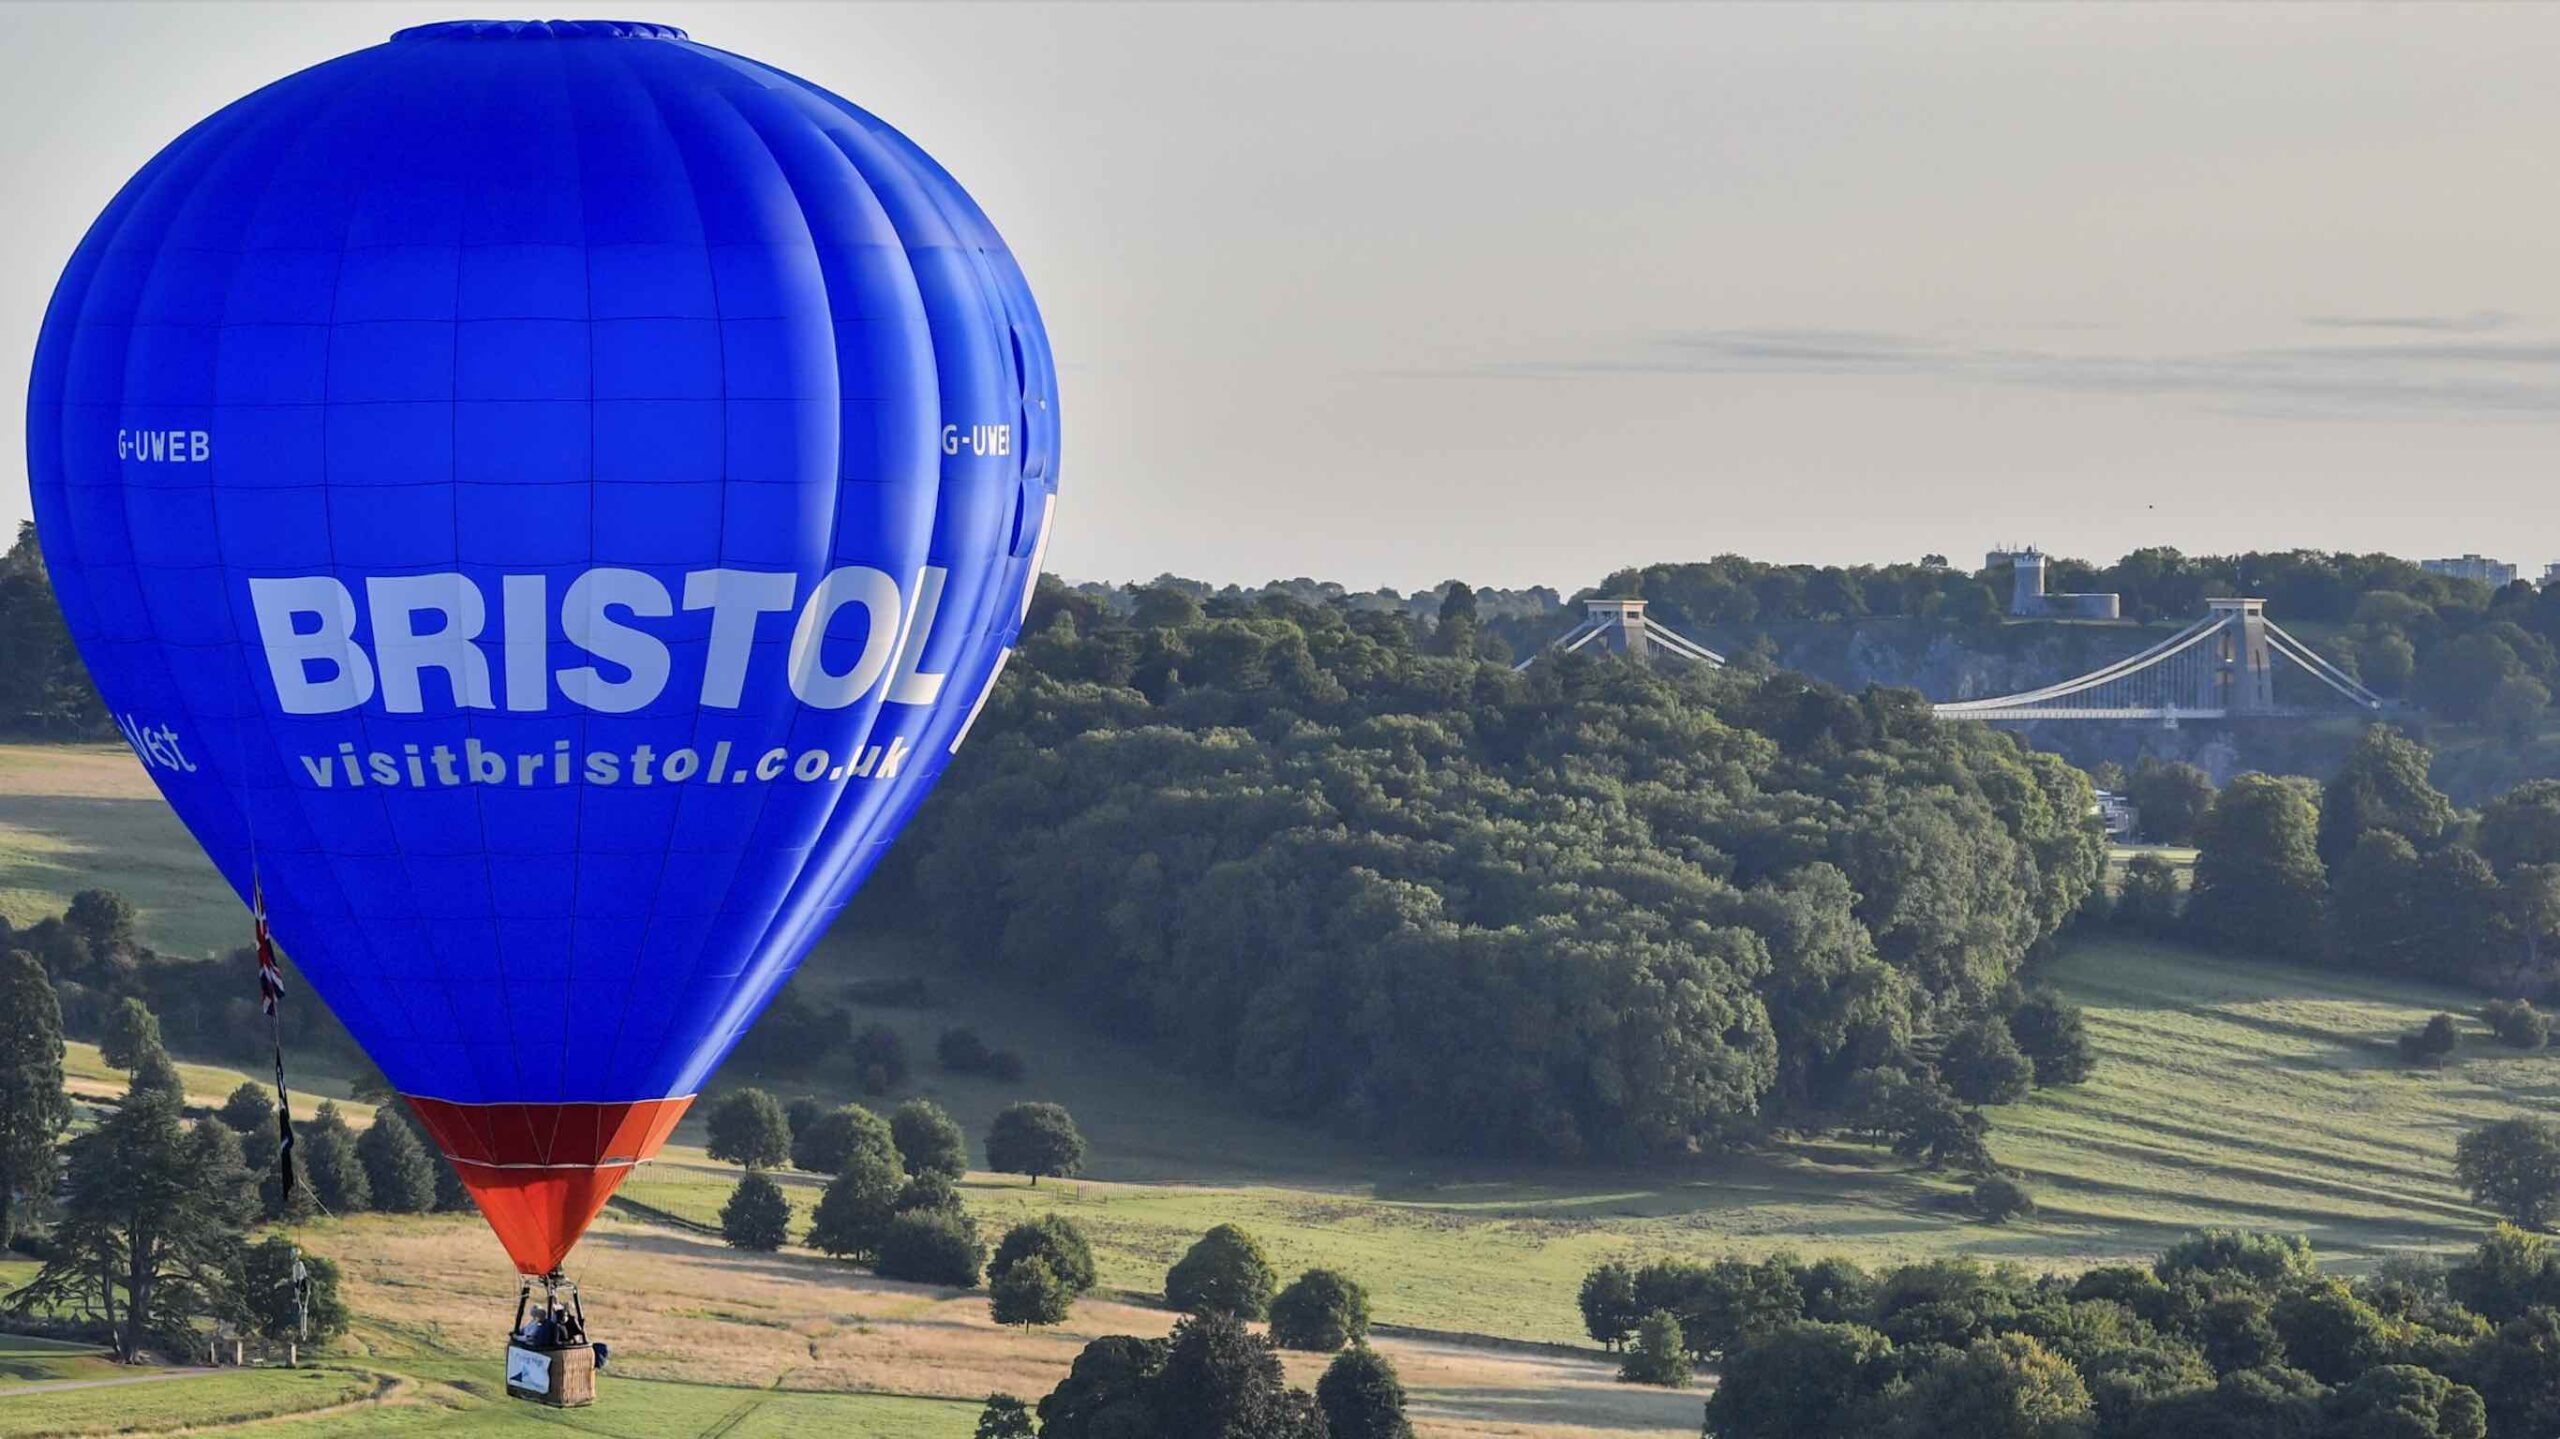 Bristol Balloon Fiesta summer events and festivals in Bristol CREDIT PAULGILLISPHOTO